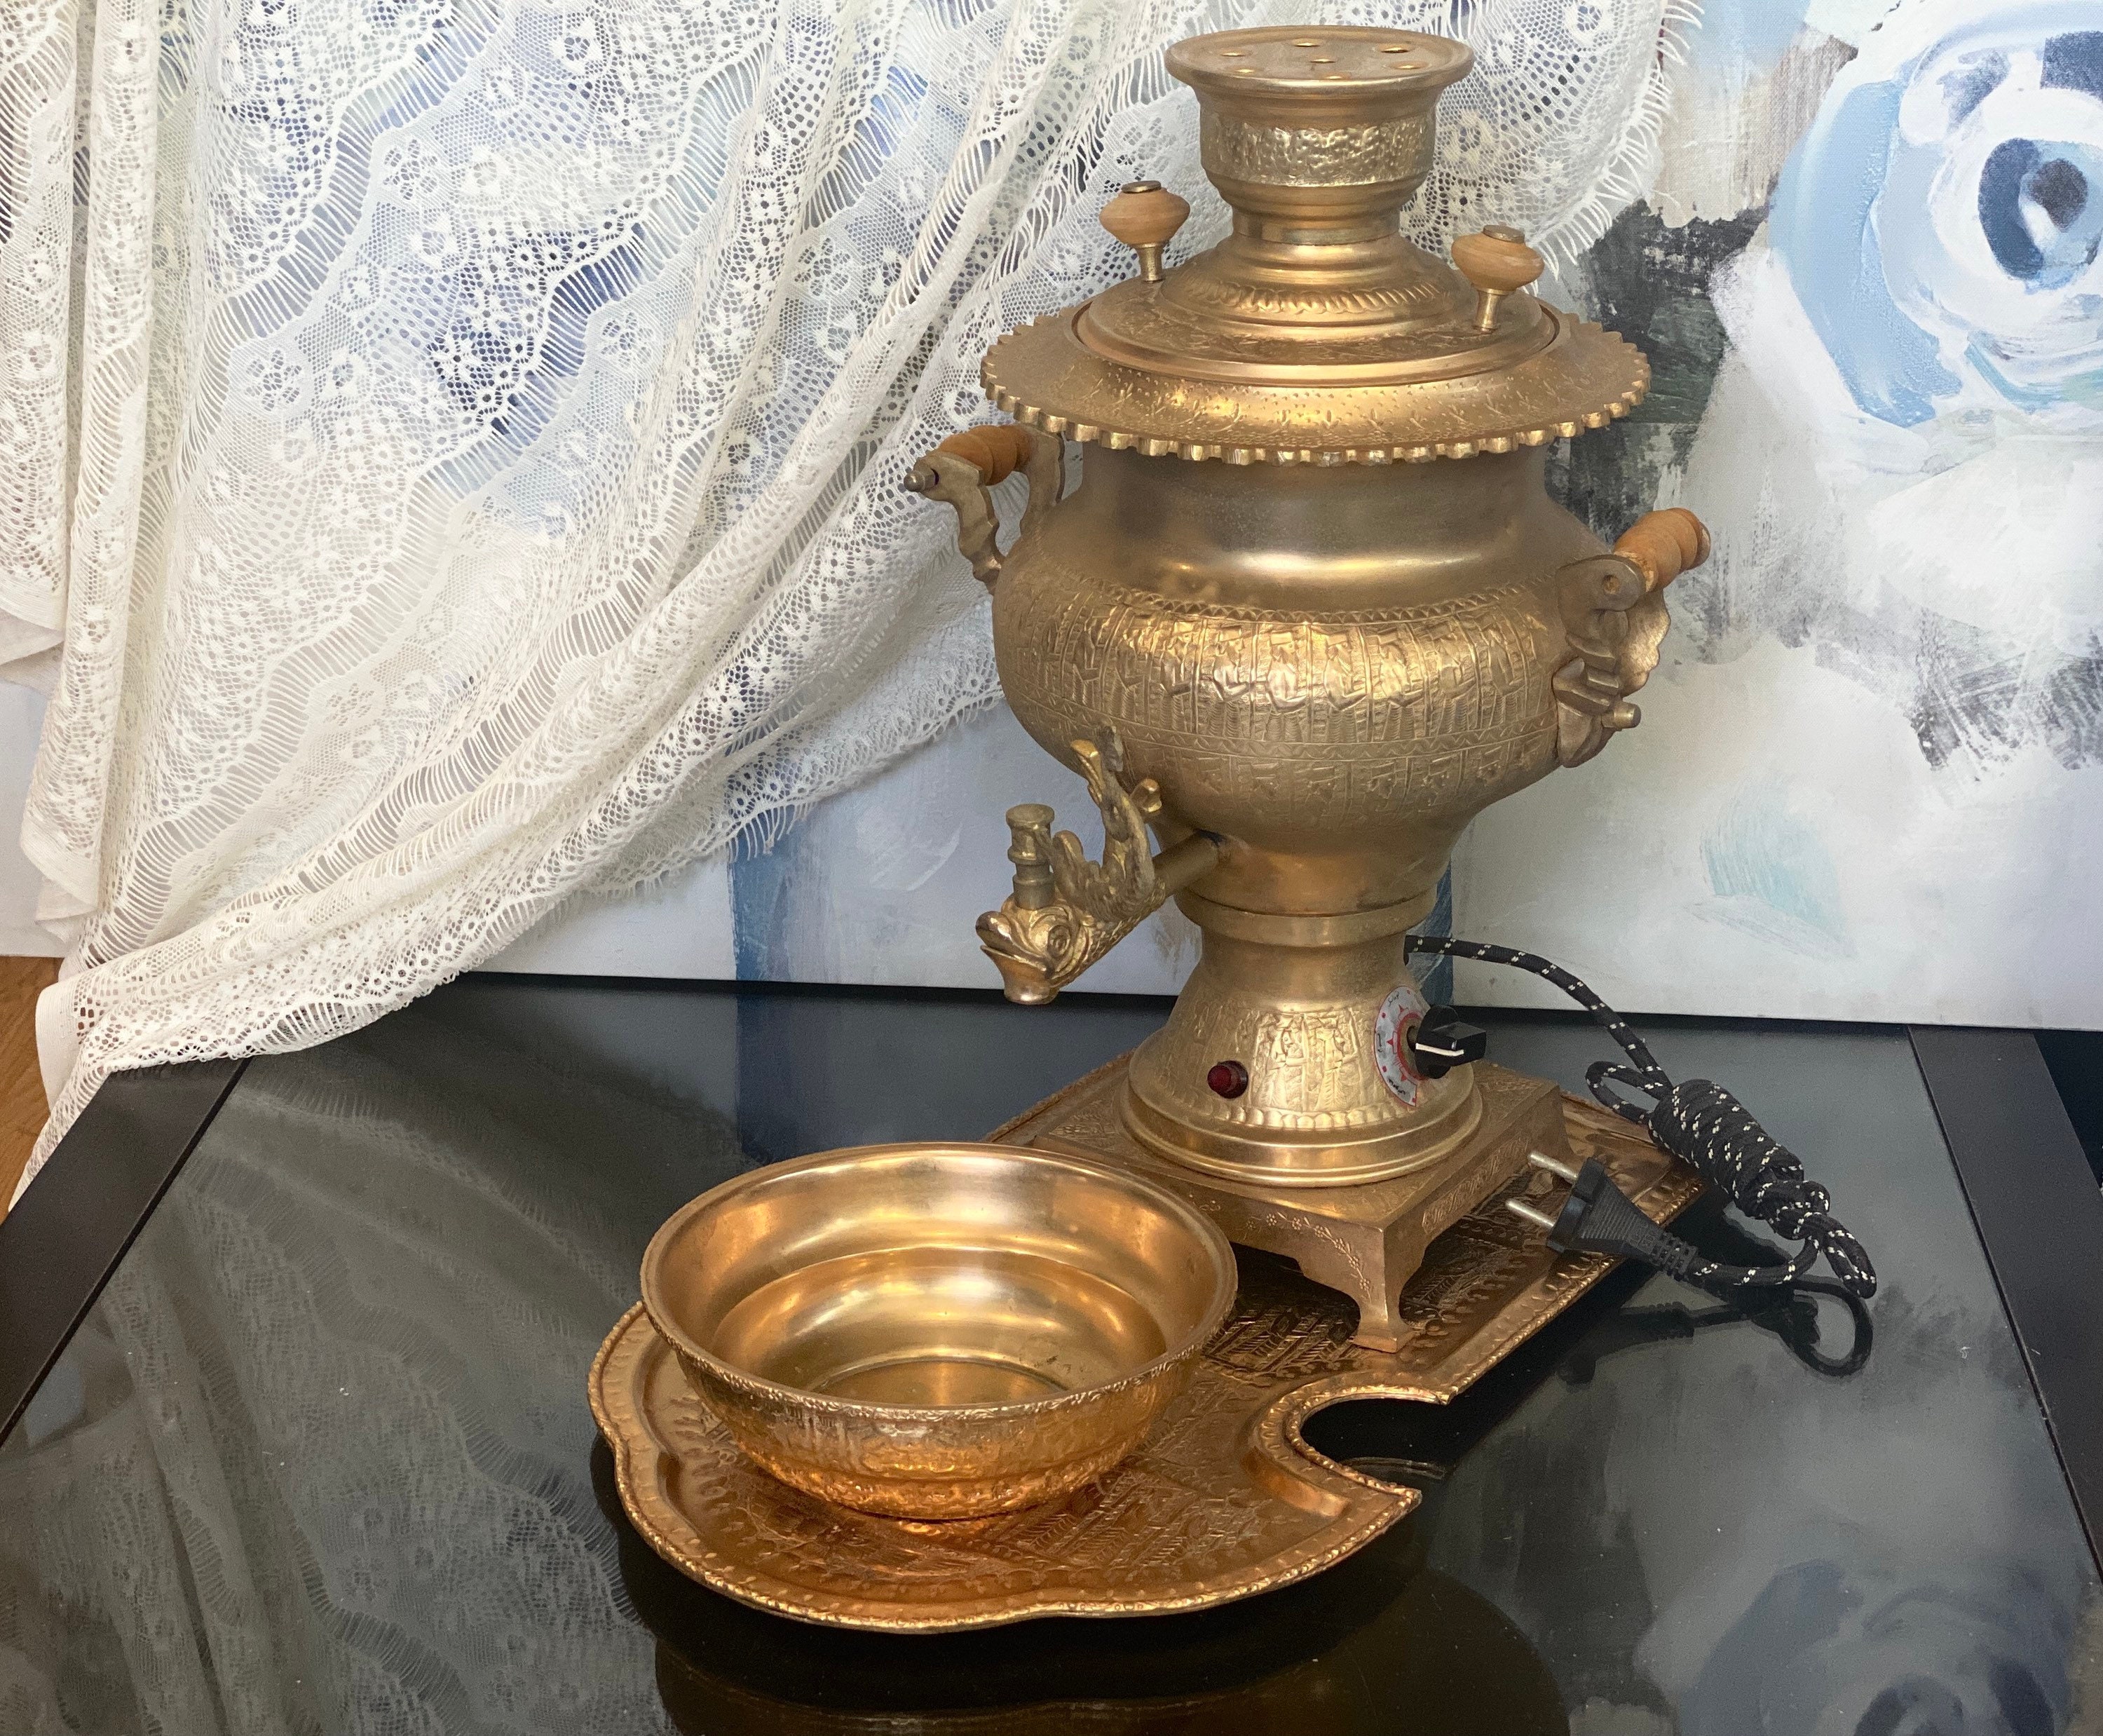 Antique Gold Brass Samovar Tray Bowl Persian Tea Serving Ancient Achaemenid  Empire Art Warming Footed Repoussé Ornate Wedding Decor Rustic -  Canada